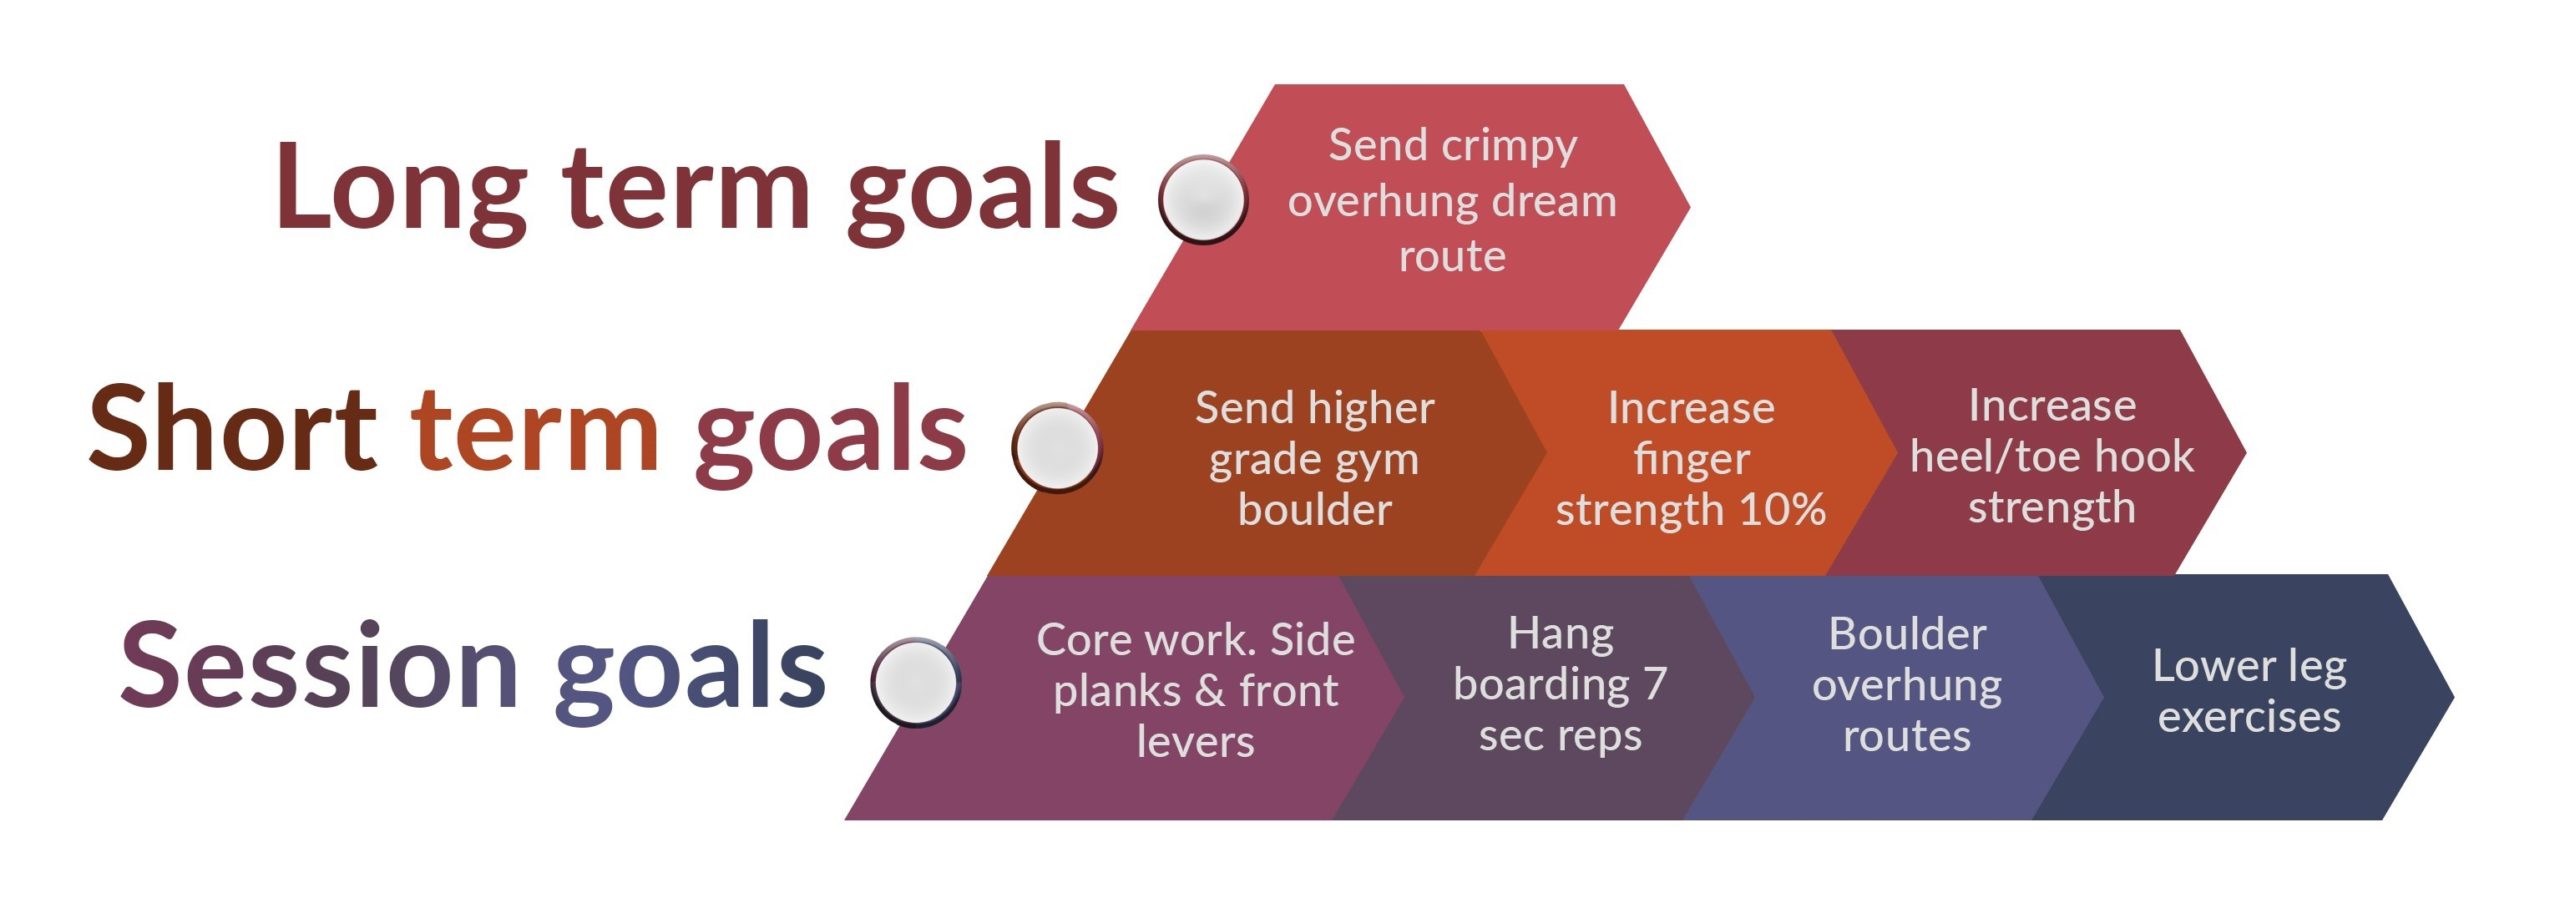 Rock climbing training goals pyramid